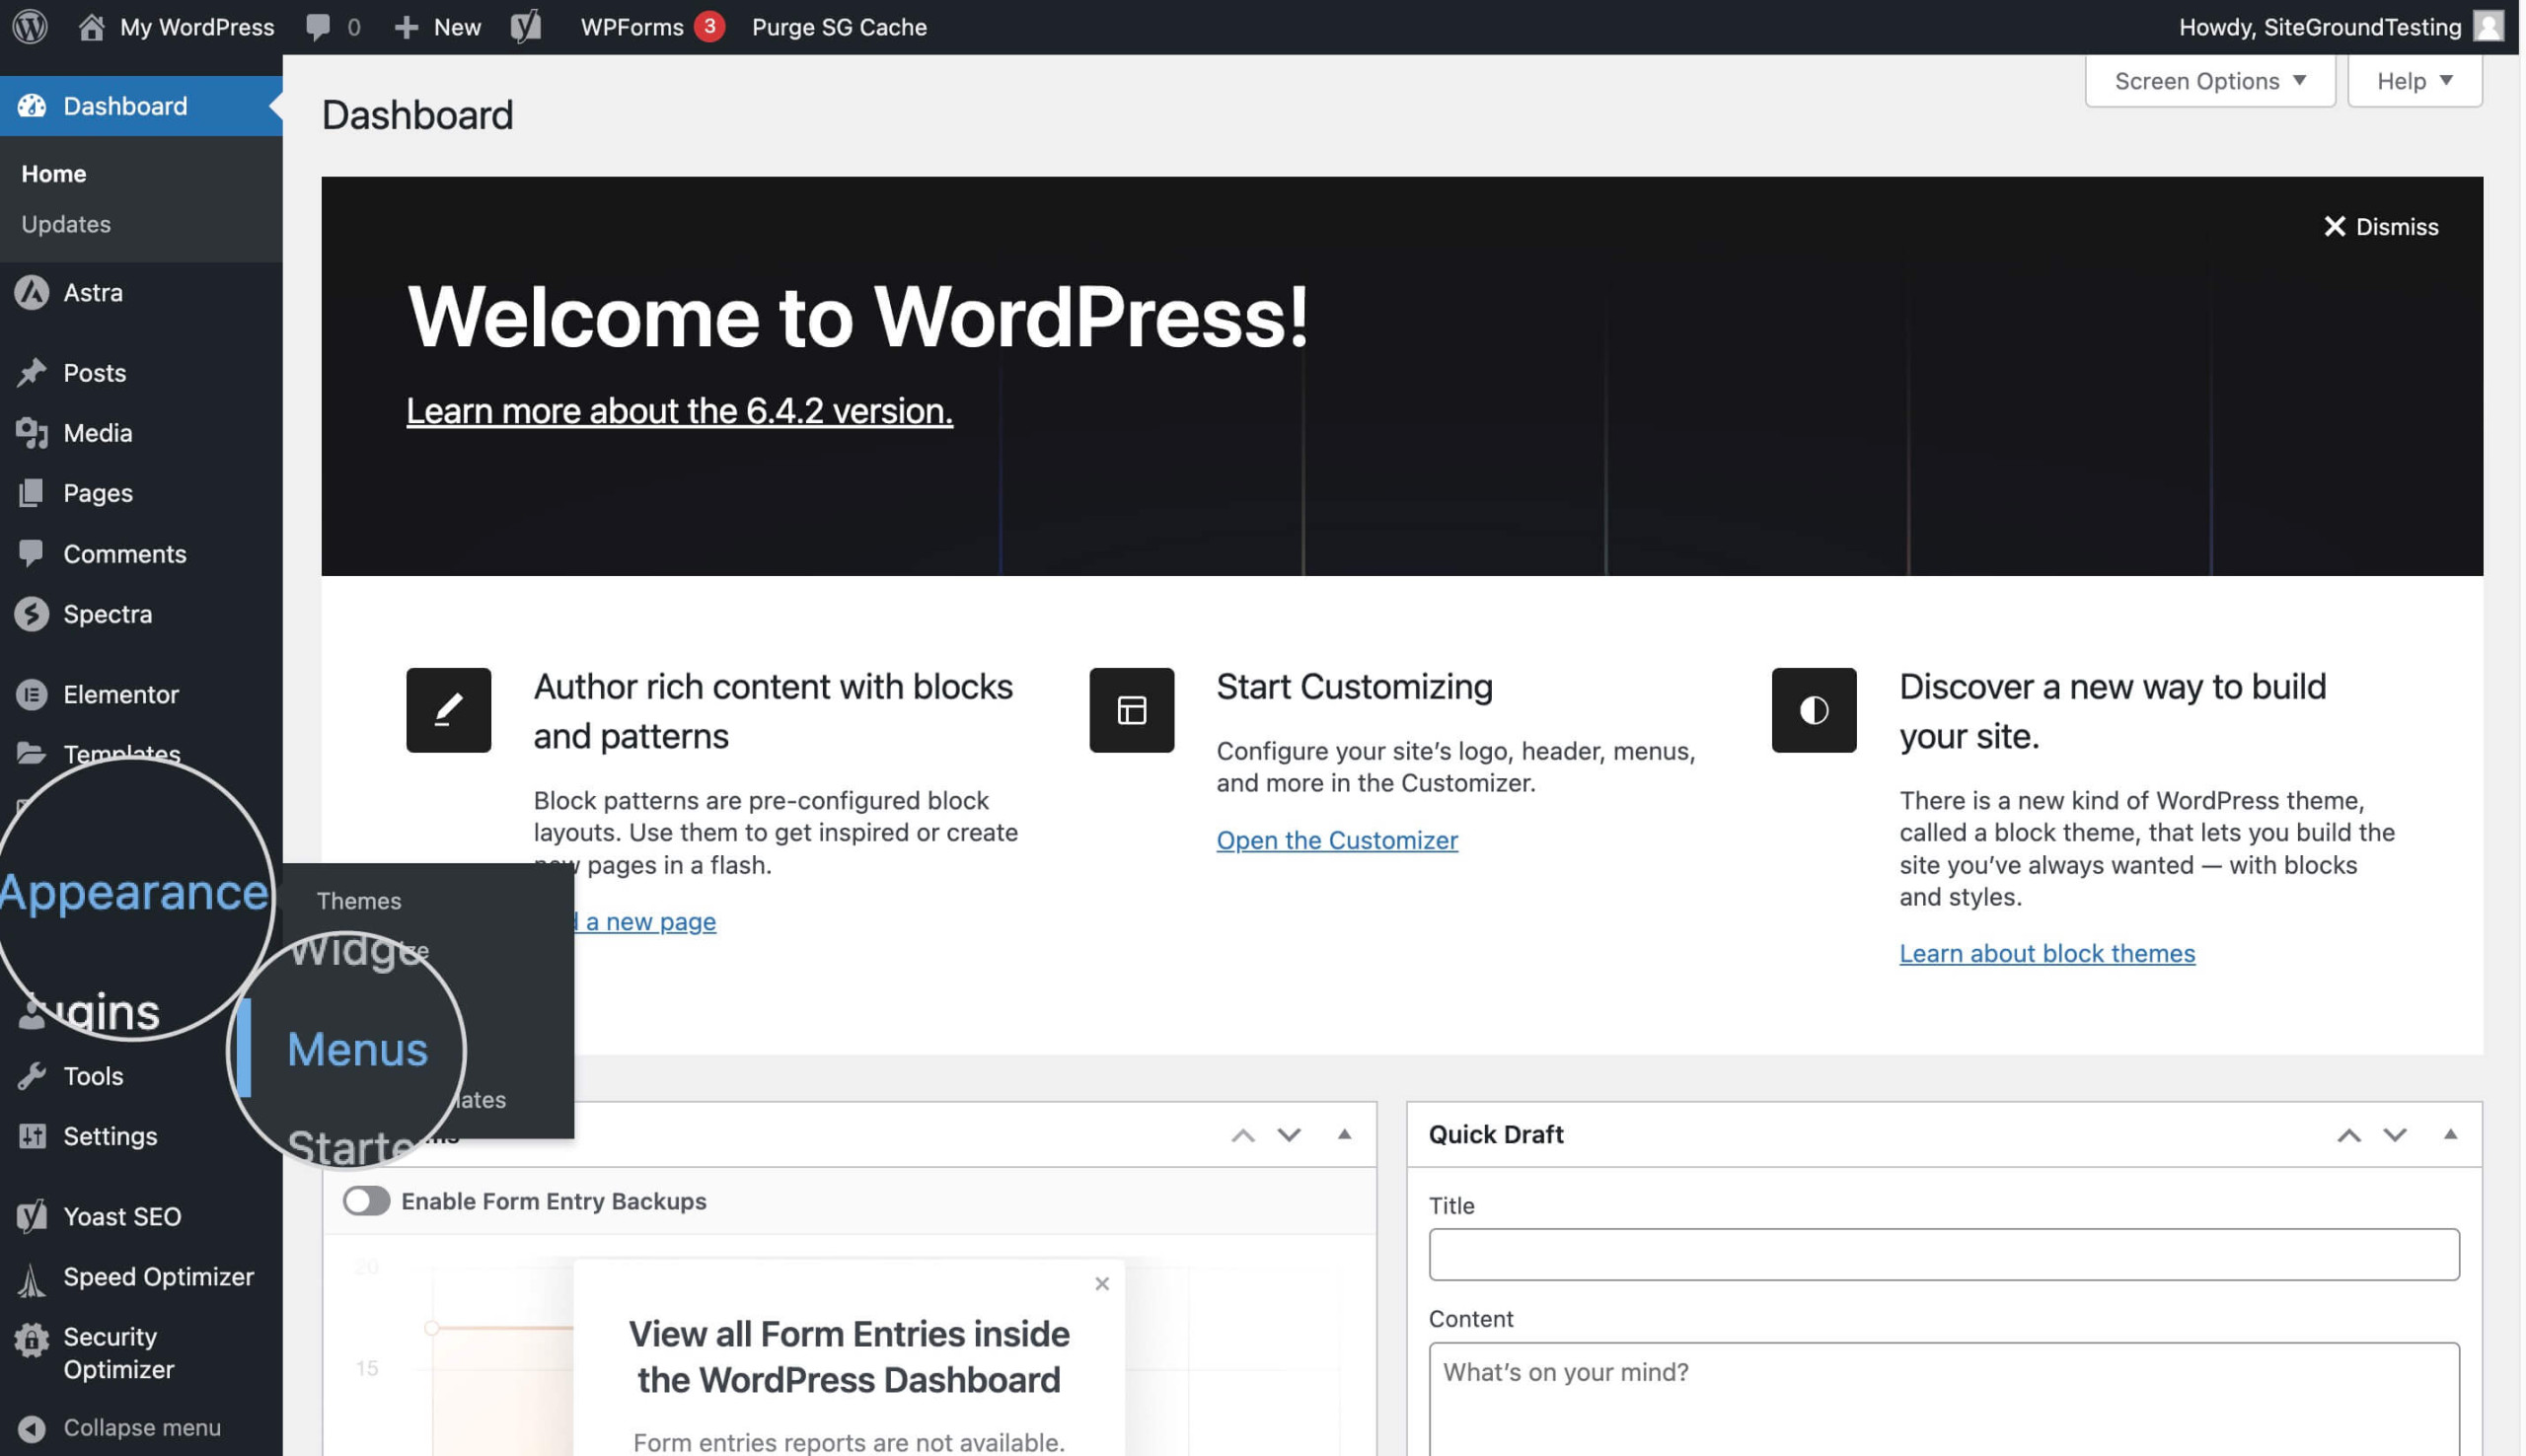 Screenshot showing the Appearance Menu option in the WordPress Dashboard